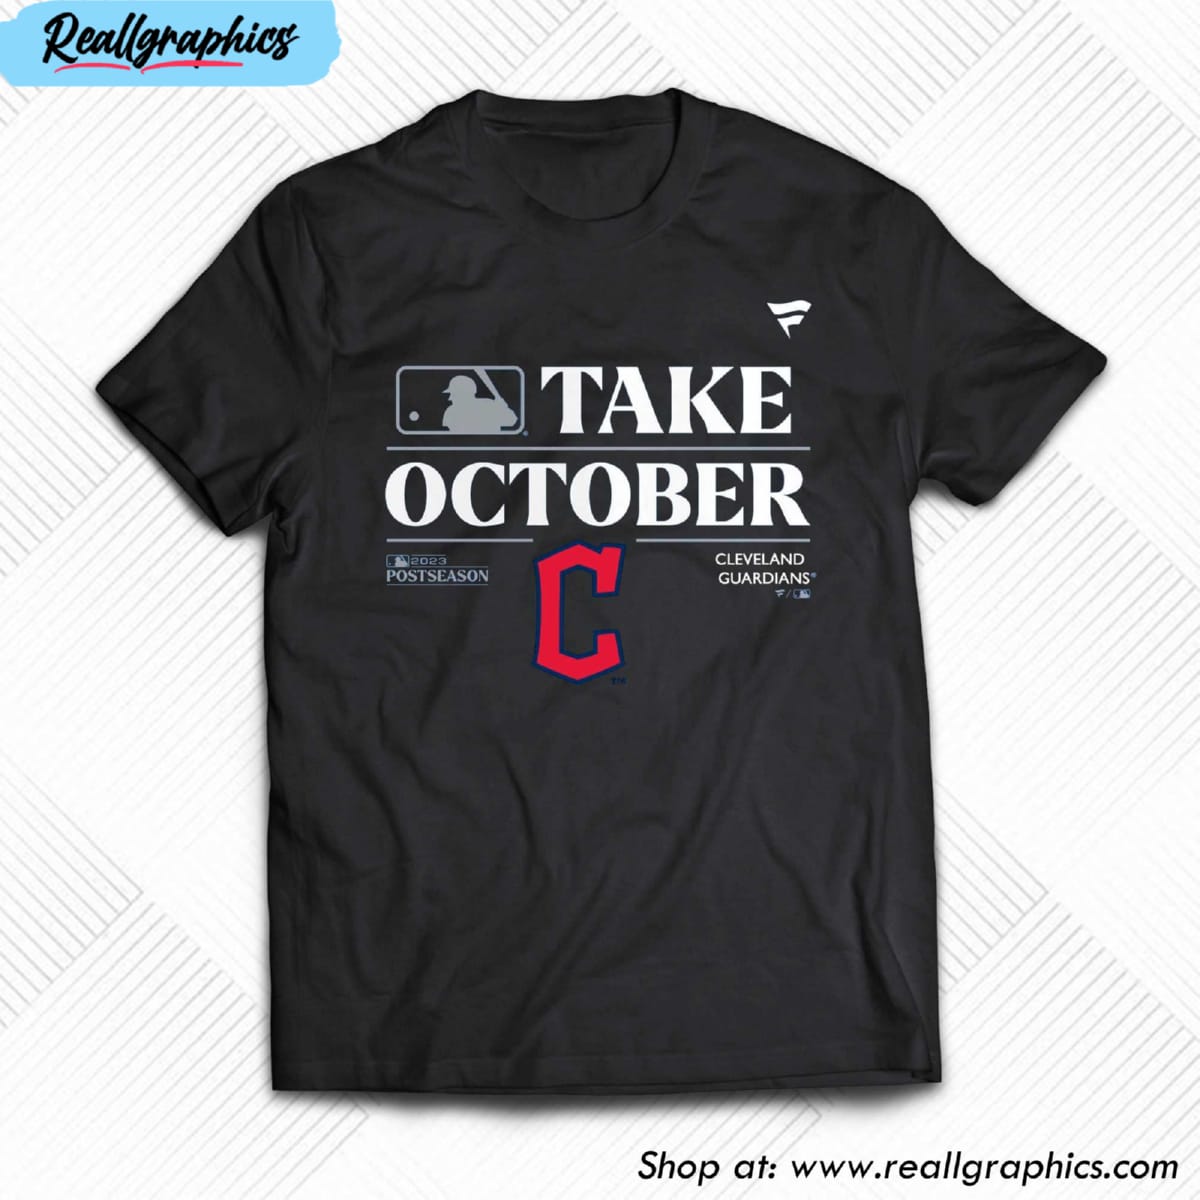 Cleveland - Cleveland Indians T Shirts, Hoodies, Sweatshirts & Merch